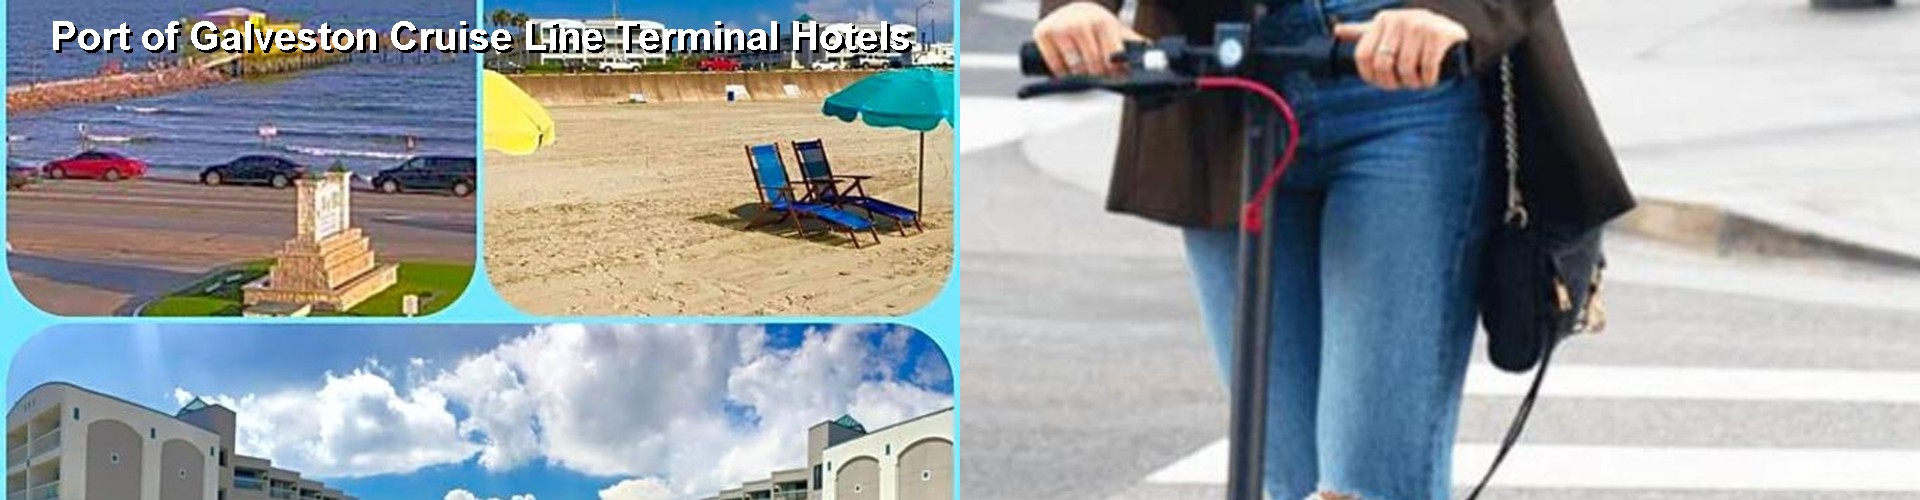 5 Best Hotels near Port of Galveston Cruise Line Terminal